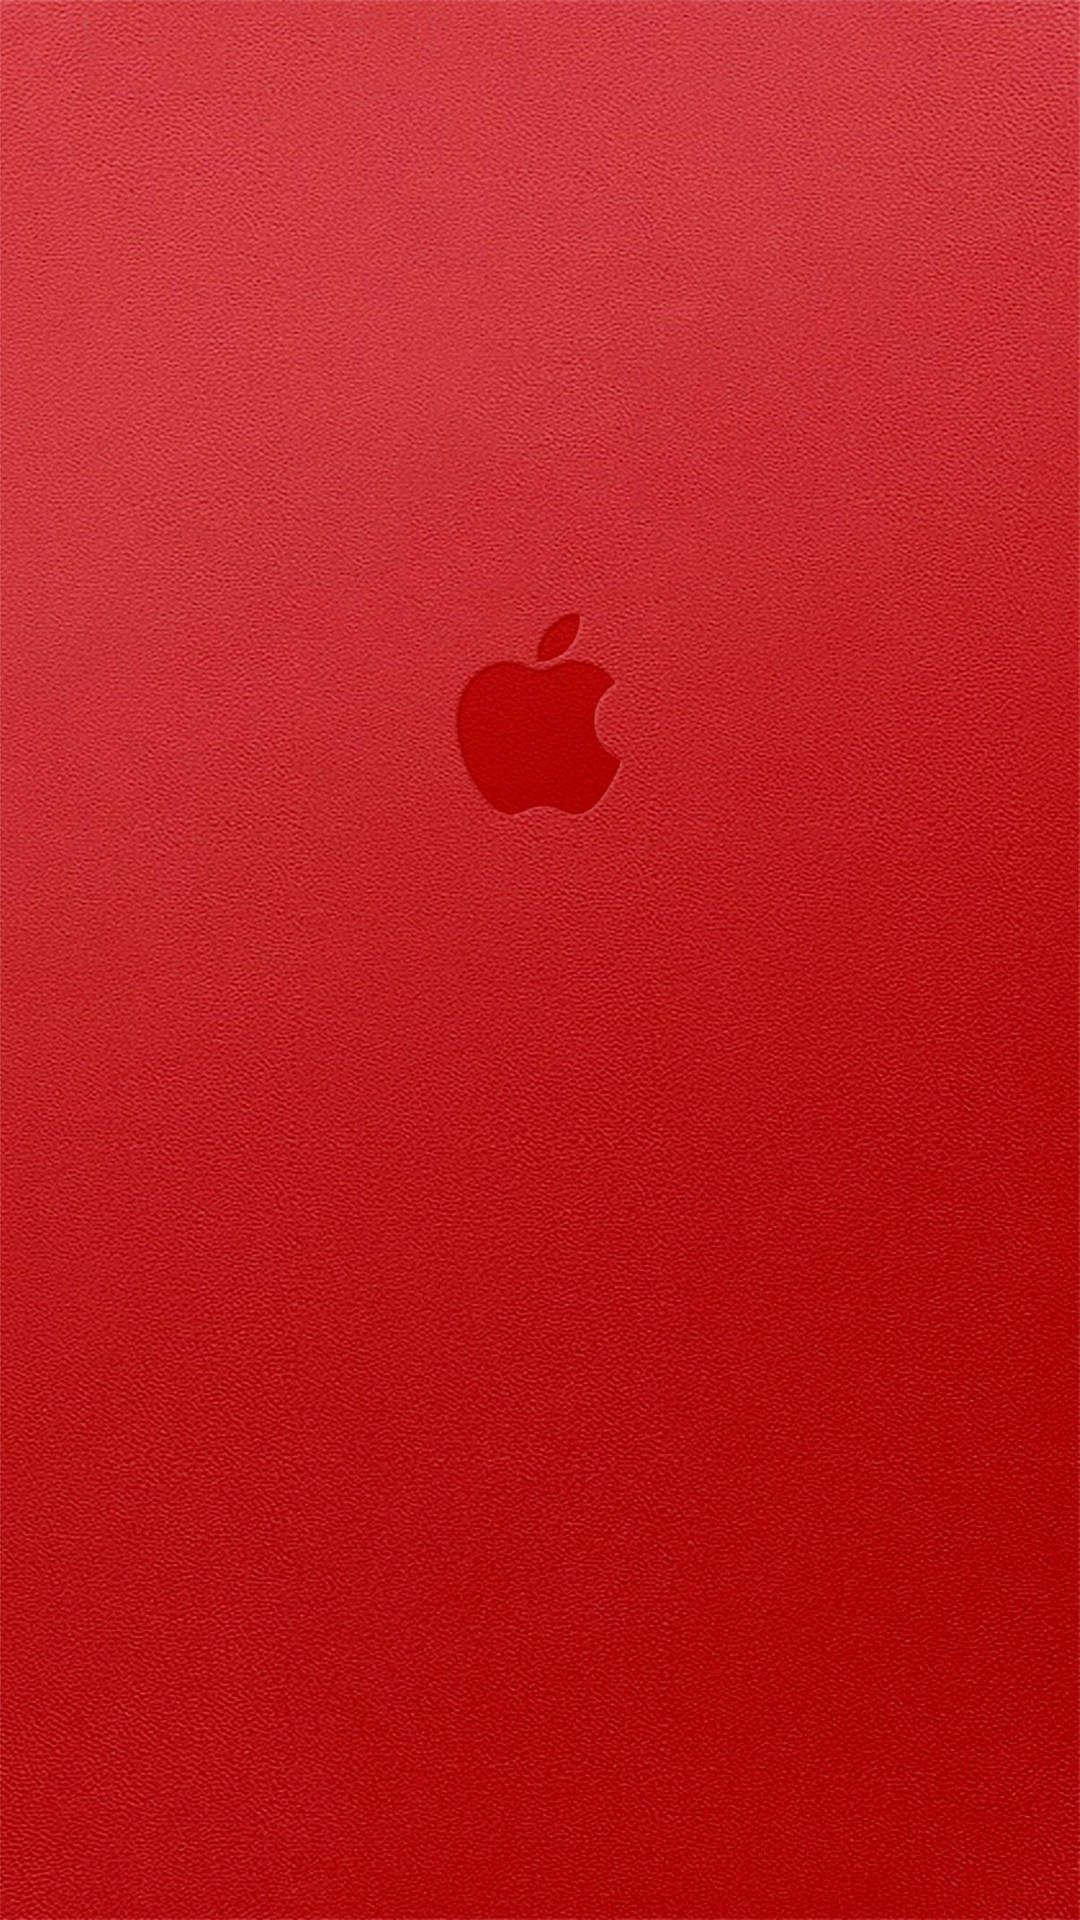 Iphone X Original Apple Logo On Red Background